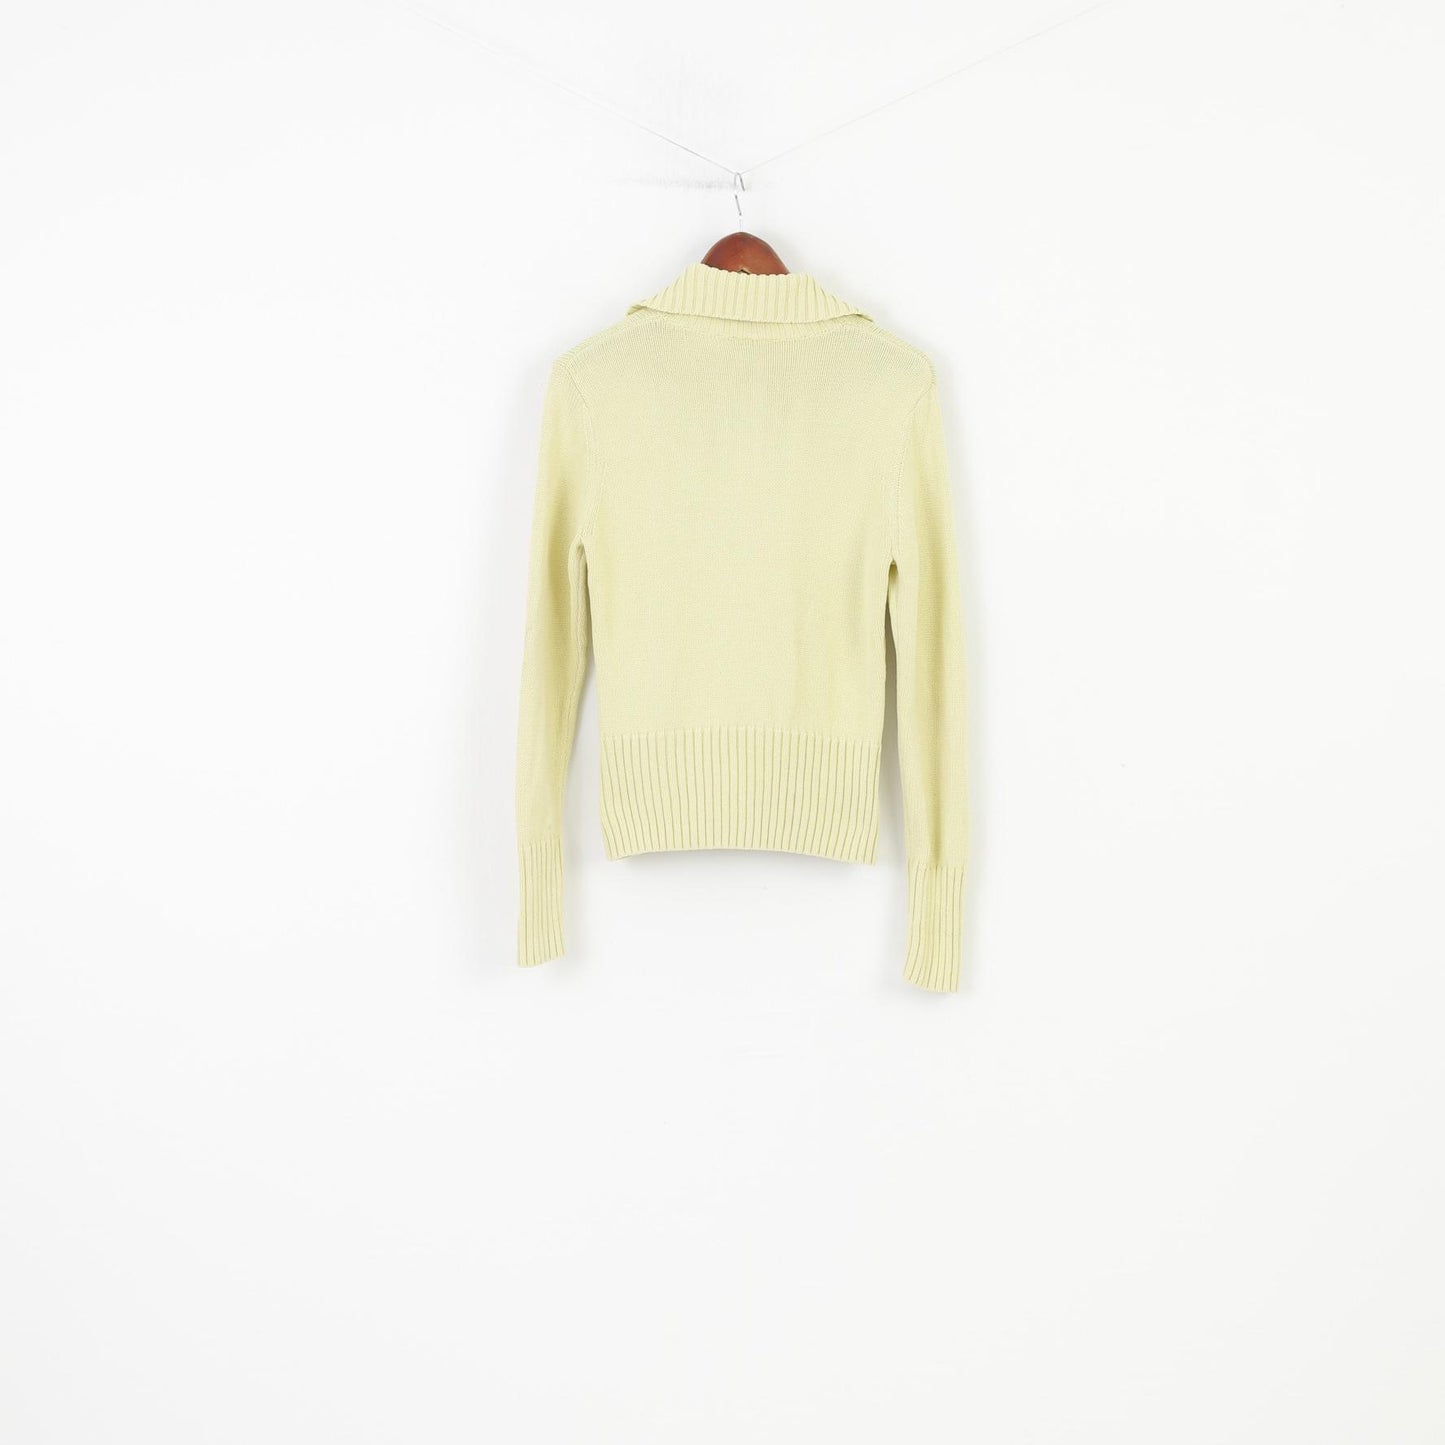 Gant Woman M Jumper Green Full Zipper Collar Cotton Sweater Stretch Top